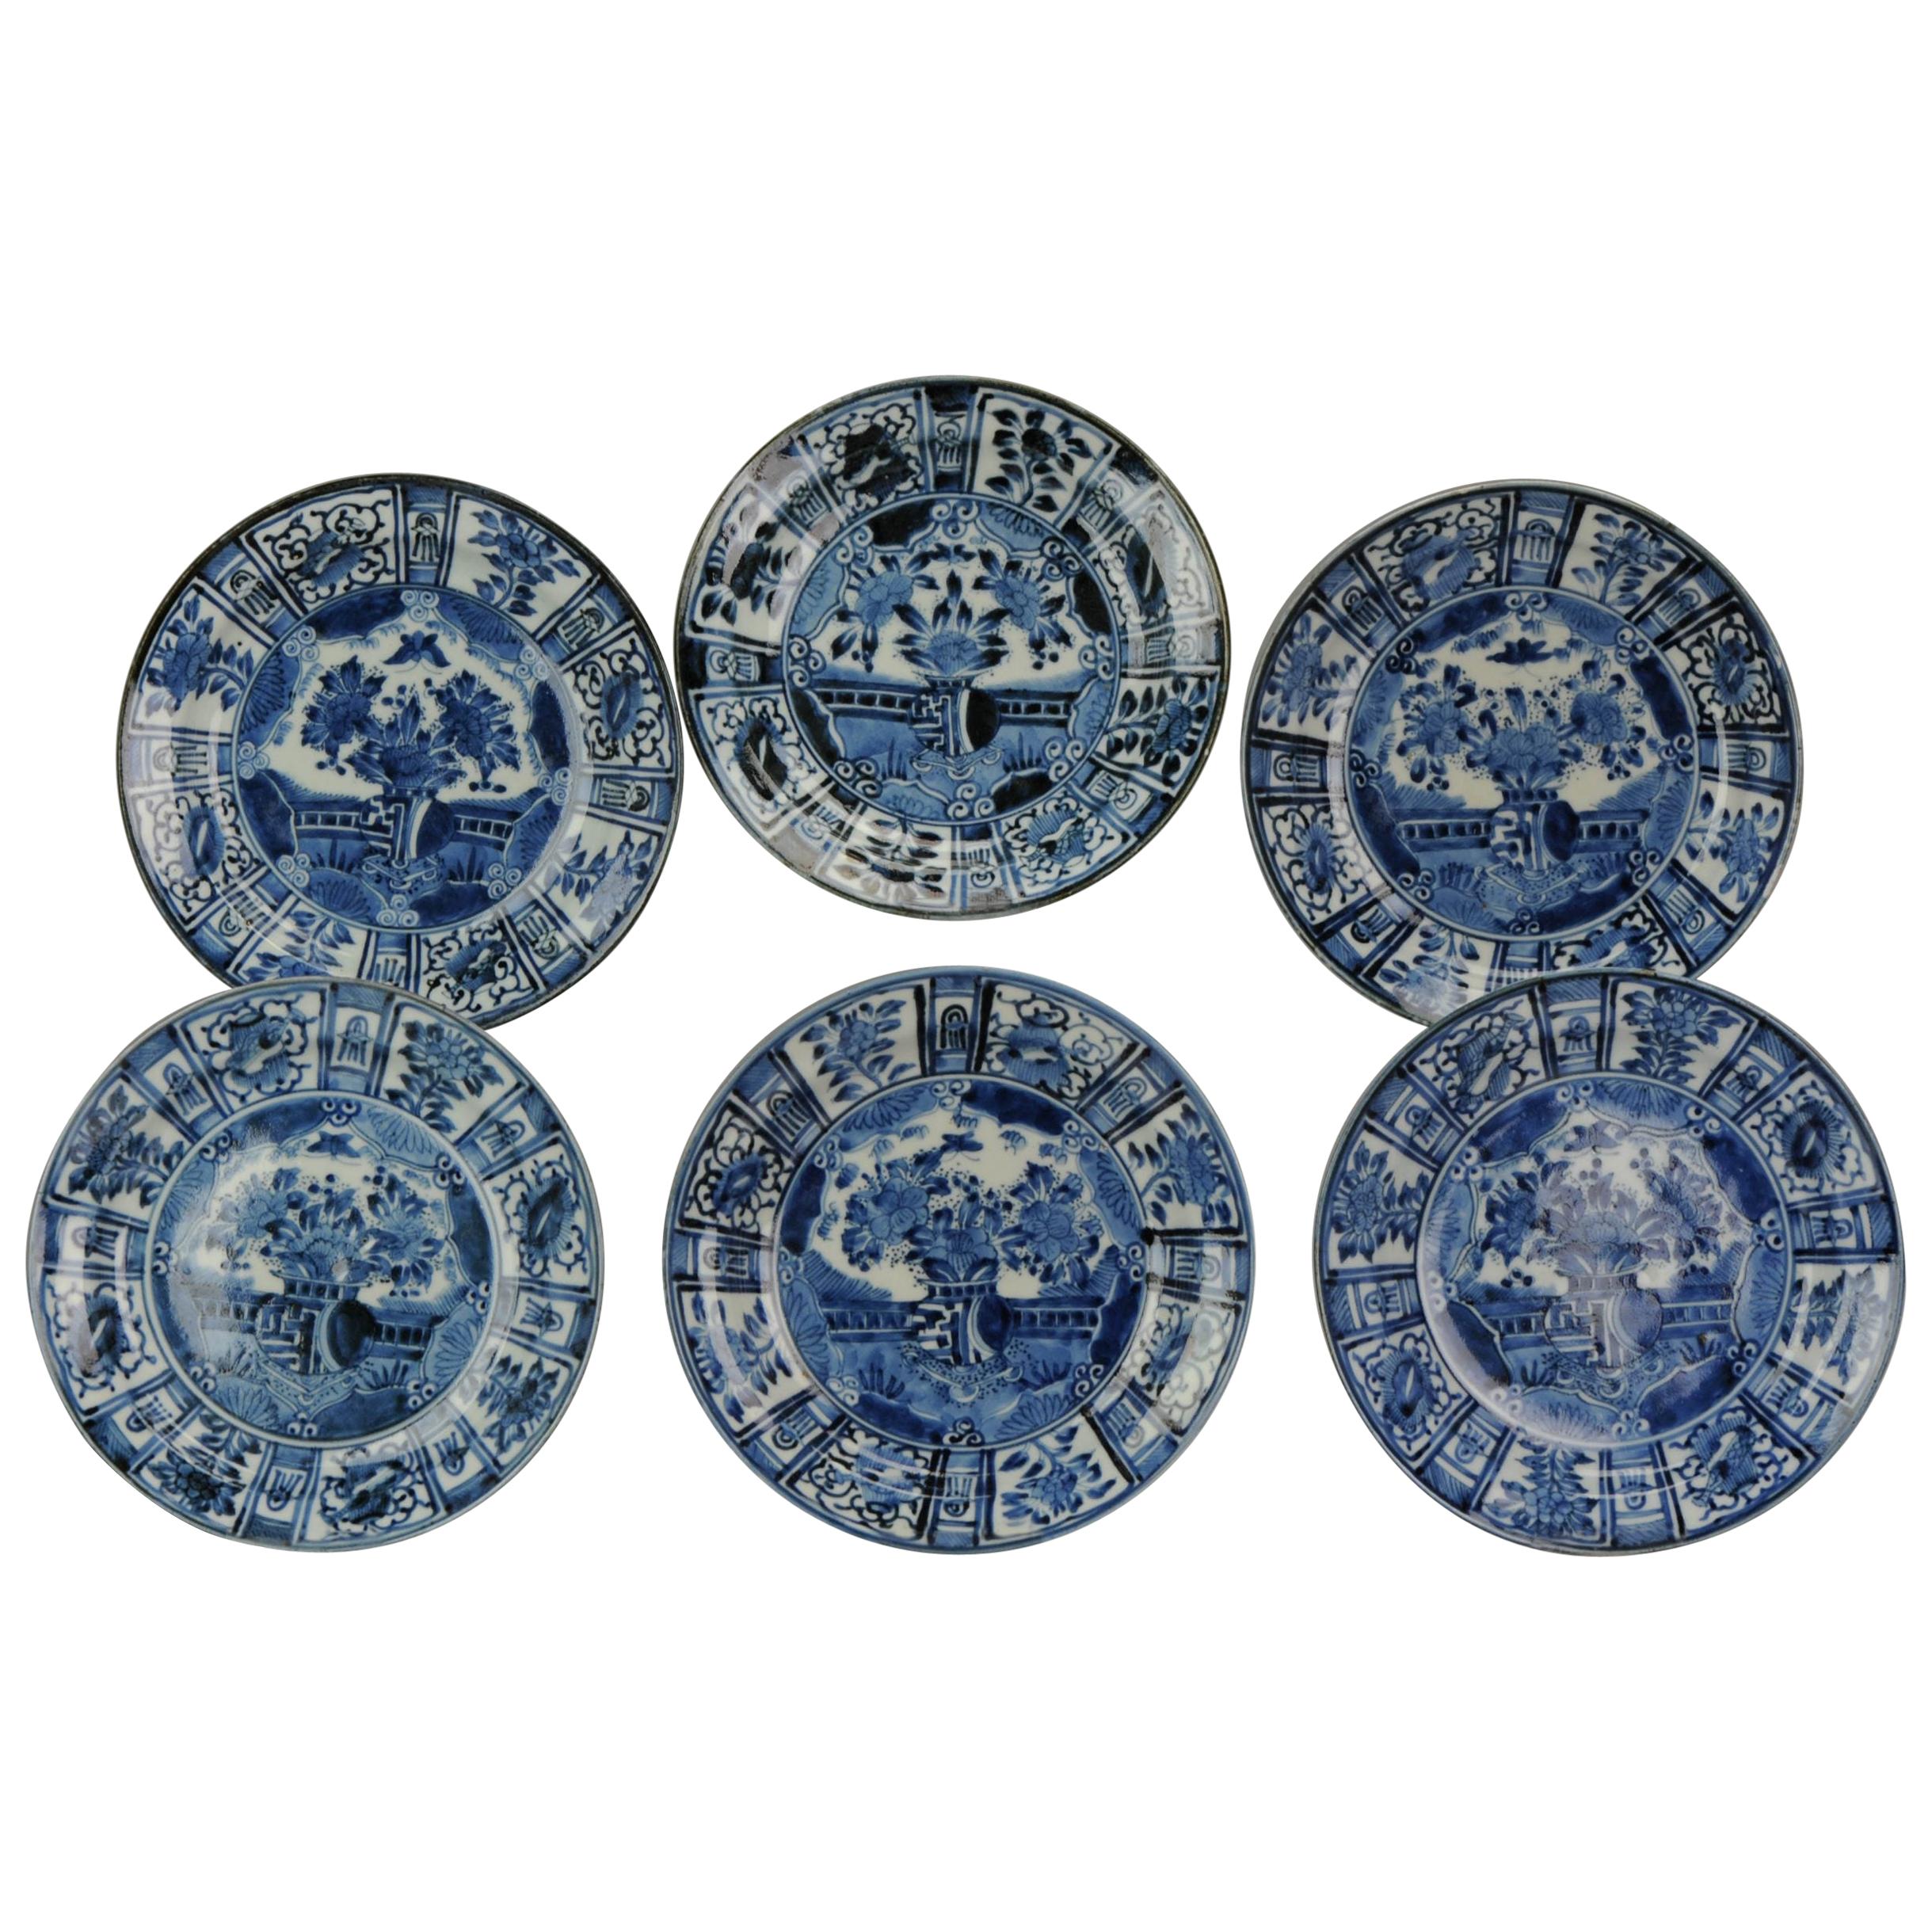 #6 Antike japanisches Porzellan 1680-1710 Edo-Periode Kraak-Essteller im Angebot